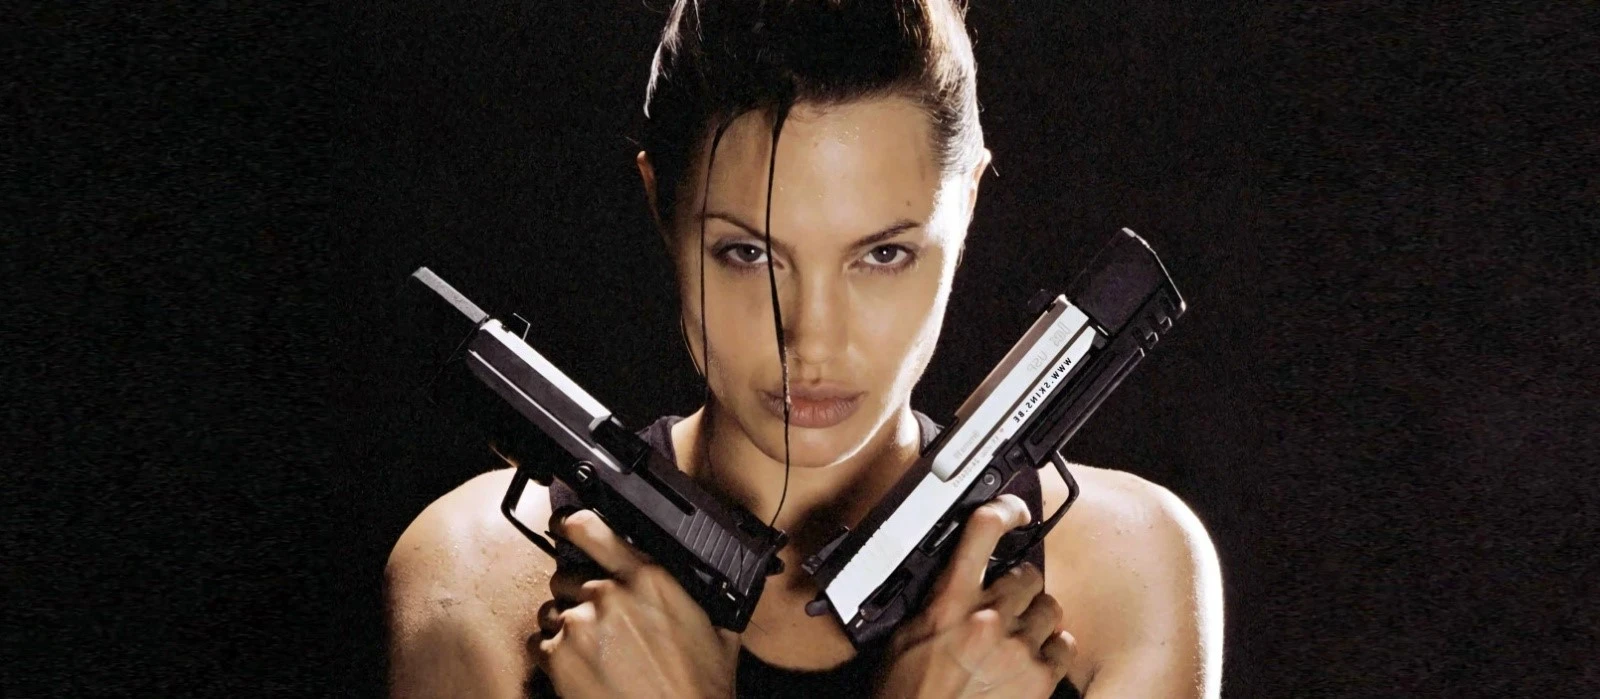 Angelina Jolie had to suffer physically during Lara Croft shoot